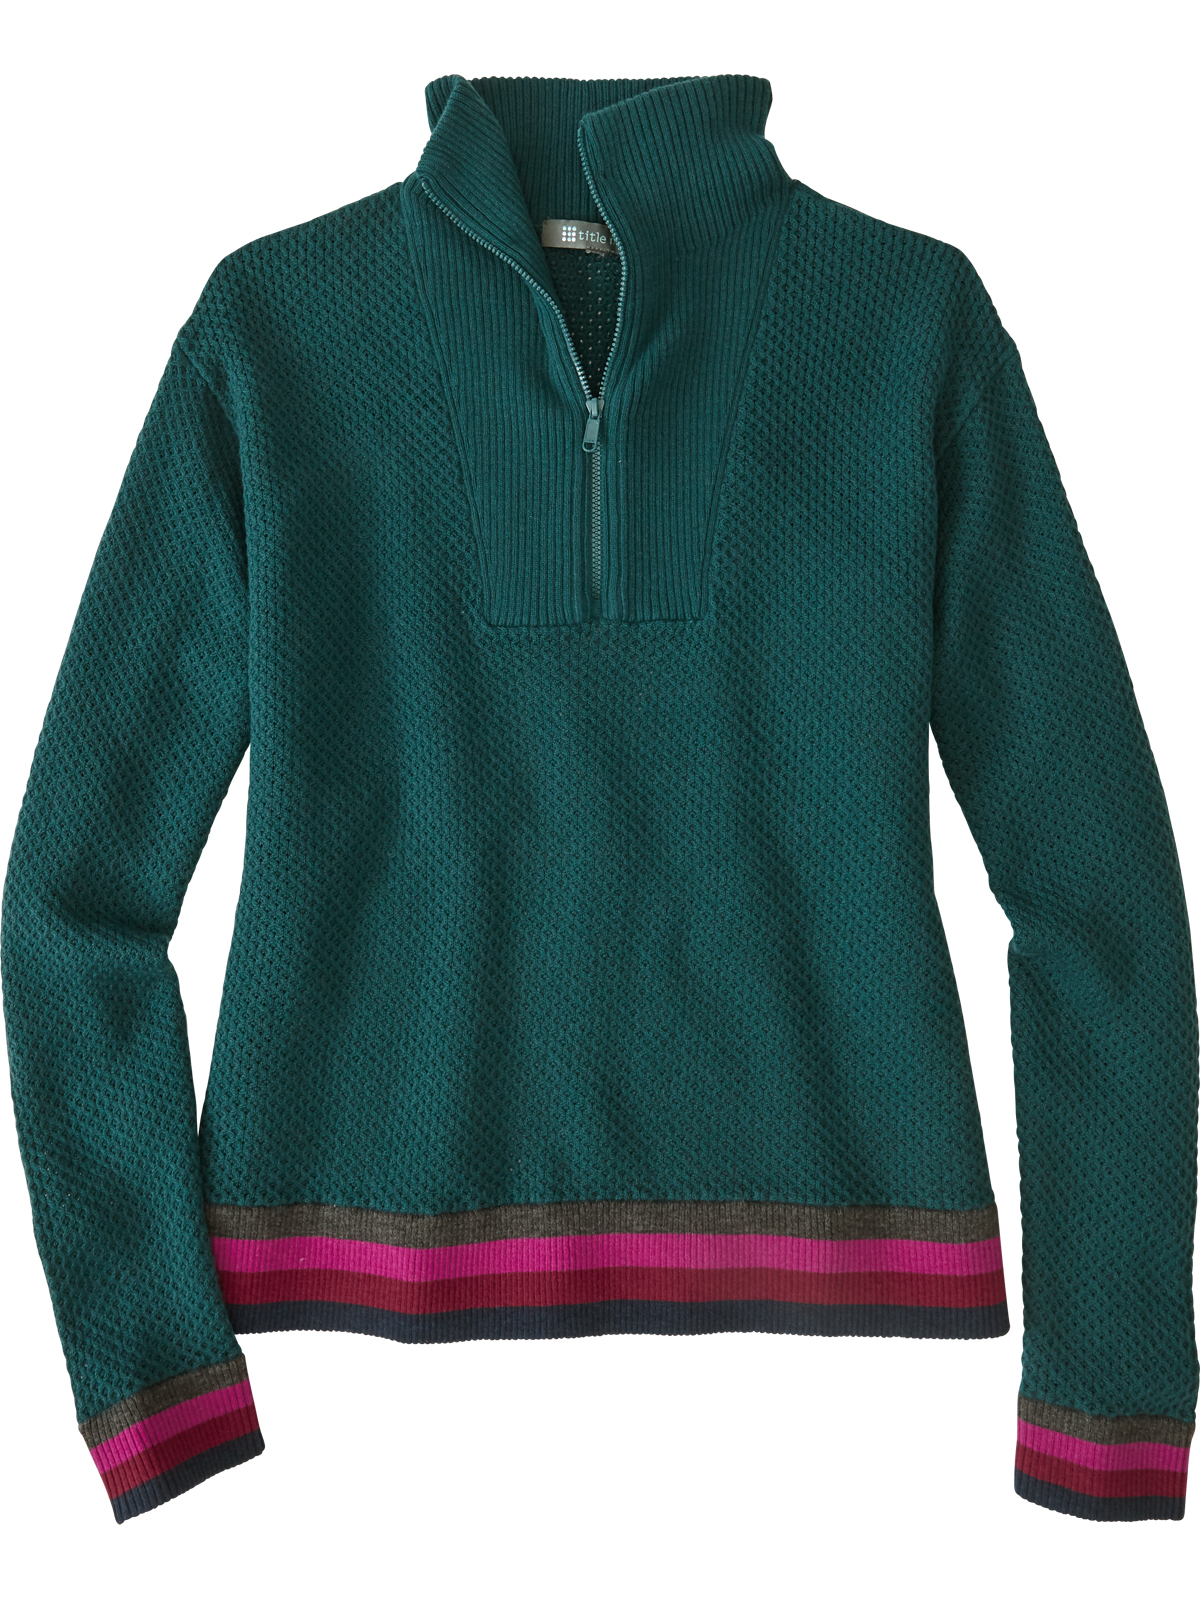 Women's 1/4 Zip Up Sweater: Woolicious Stripe | Title Nine